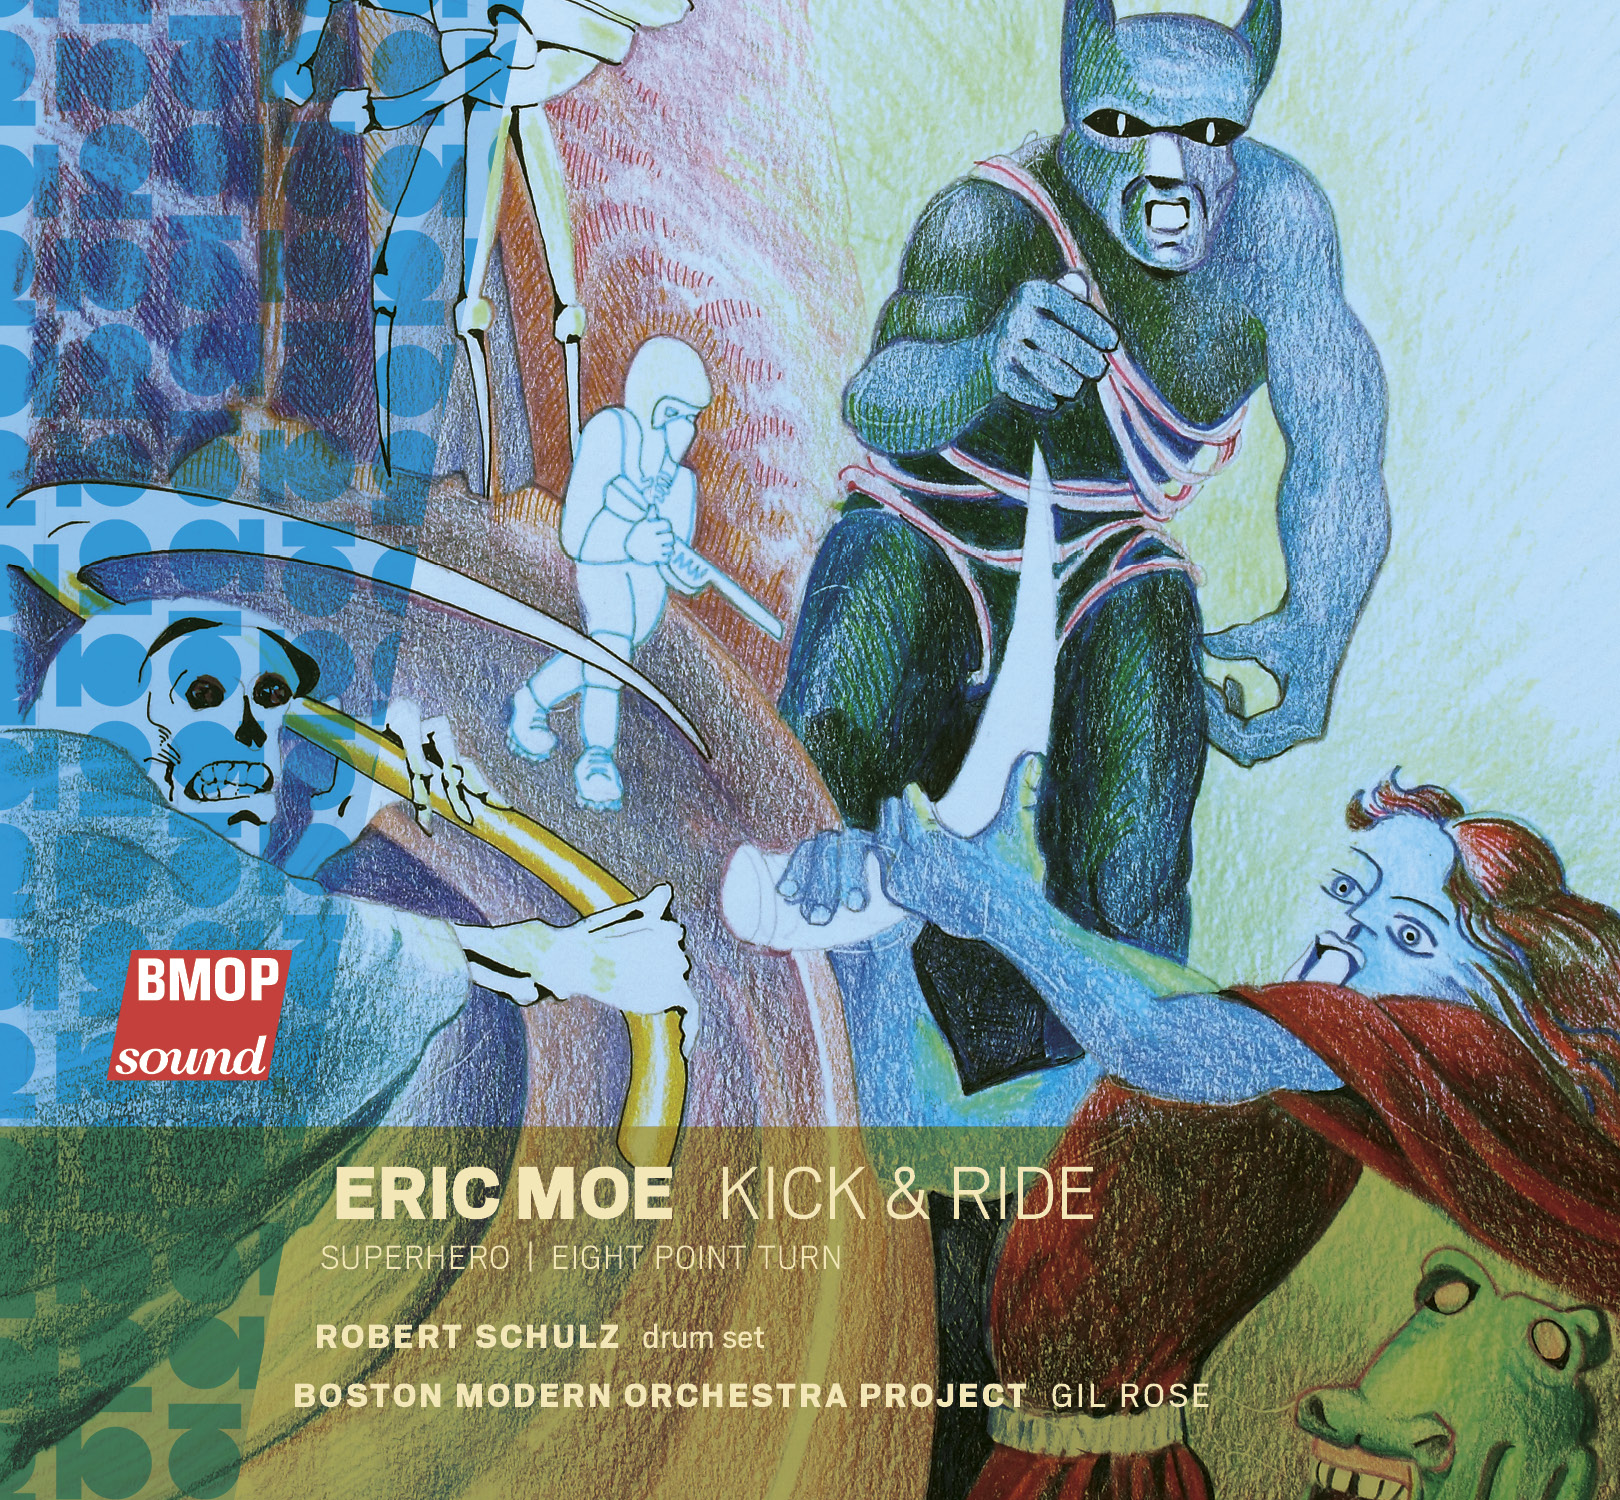 Art for Kick & Ride - II. Slipstream by Eric Moe by Robert Schulz, drum set